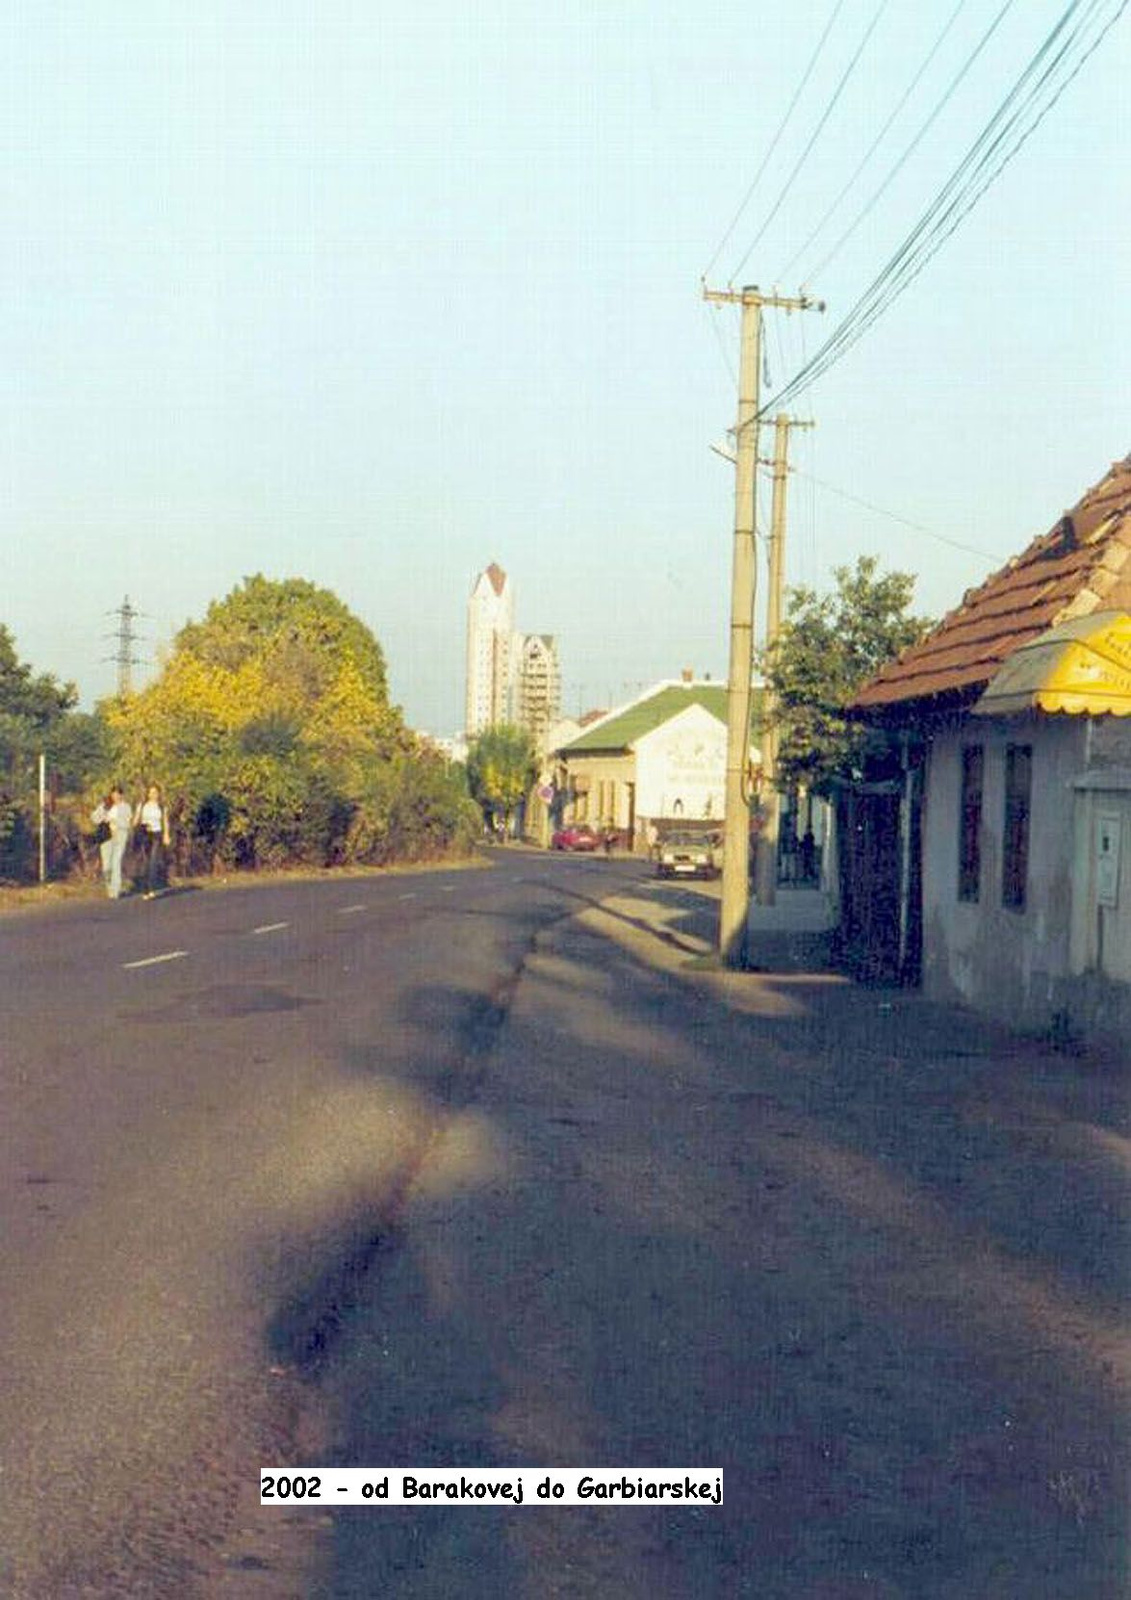 2002 - pohľad do Garbiarskej ulice od Barakovej ulice